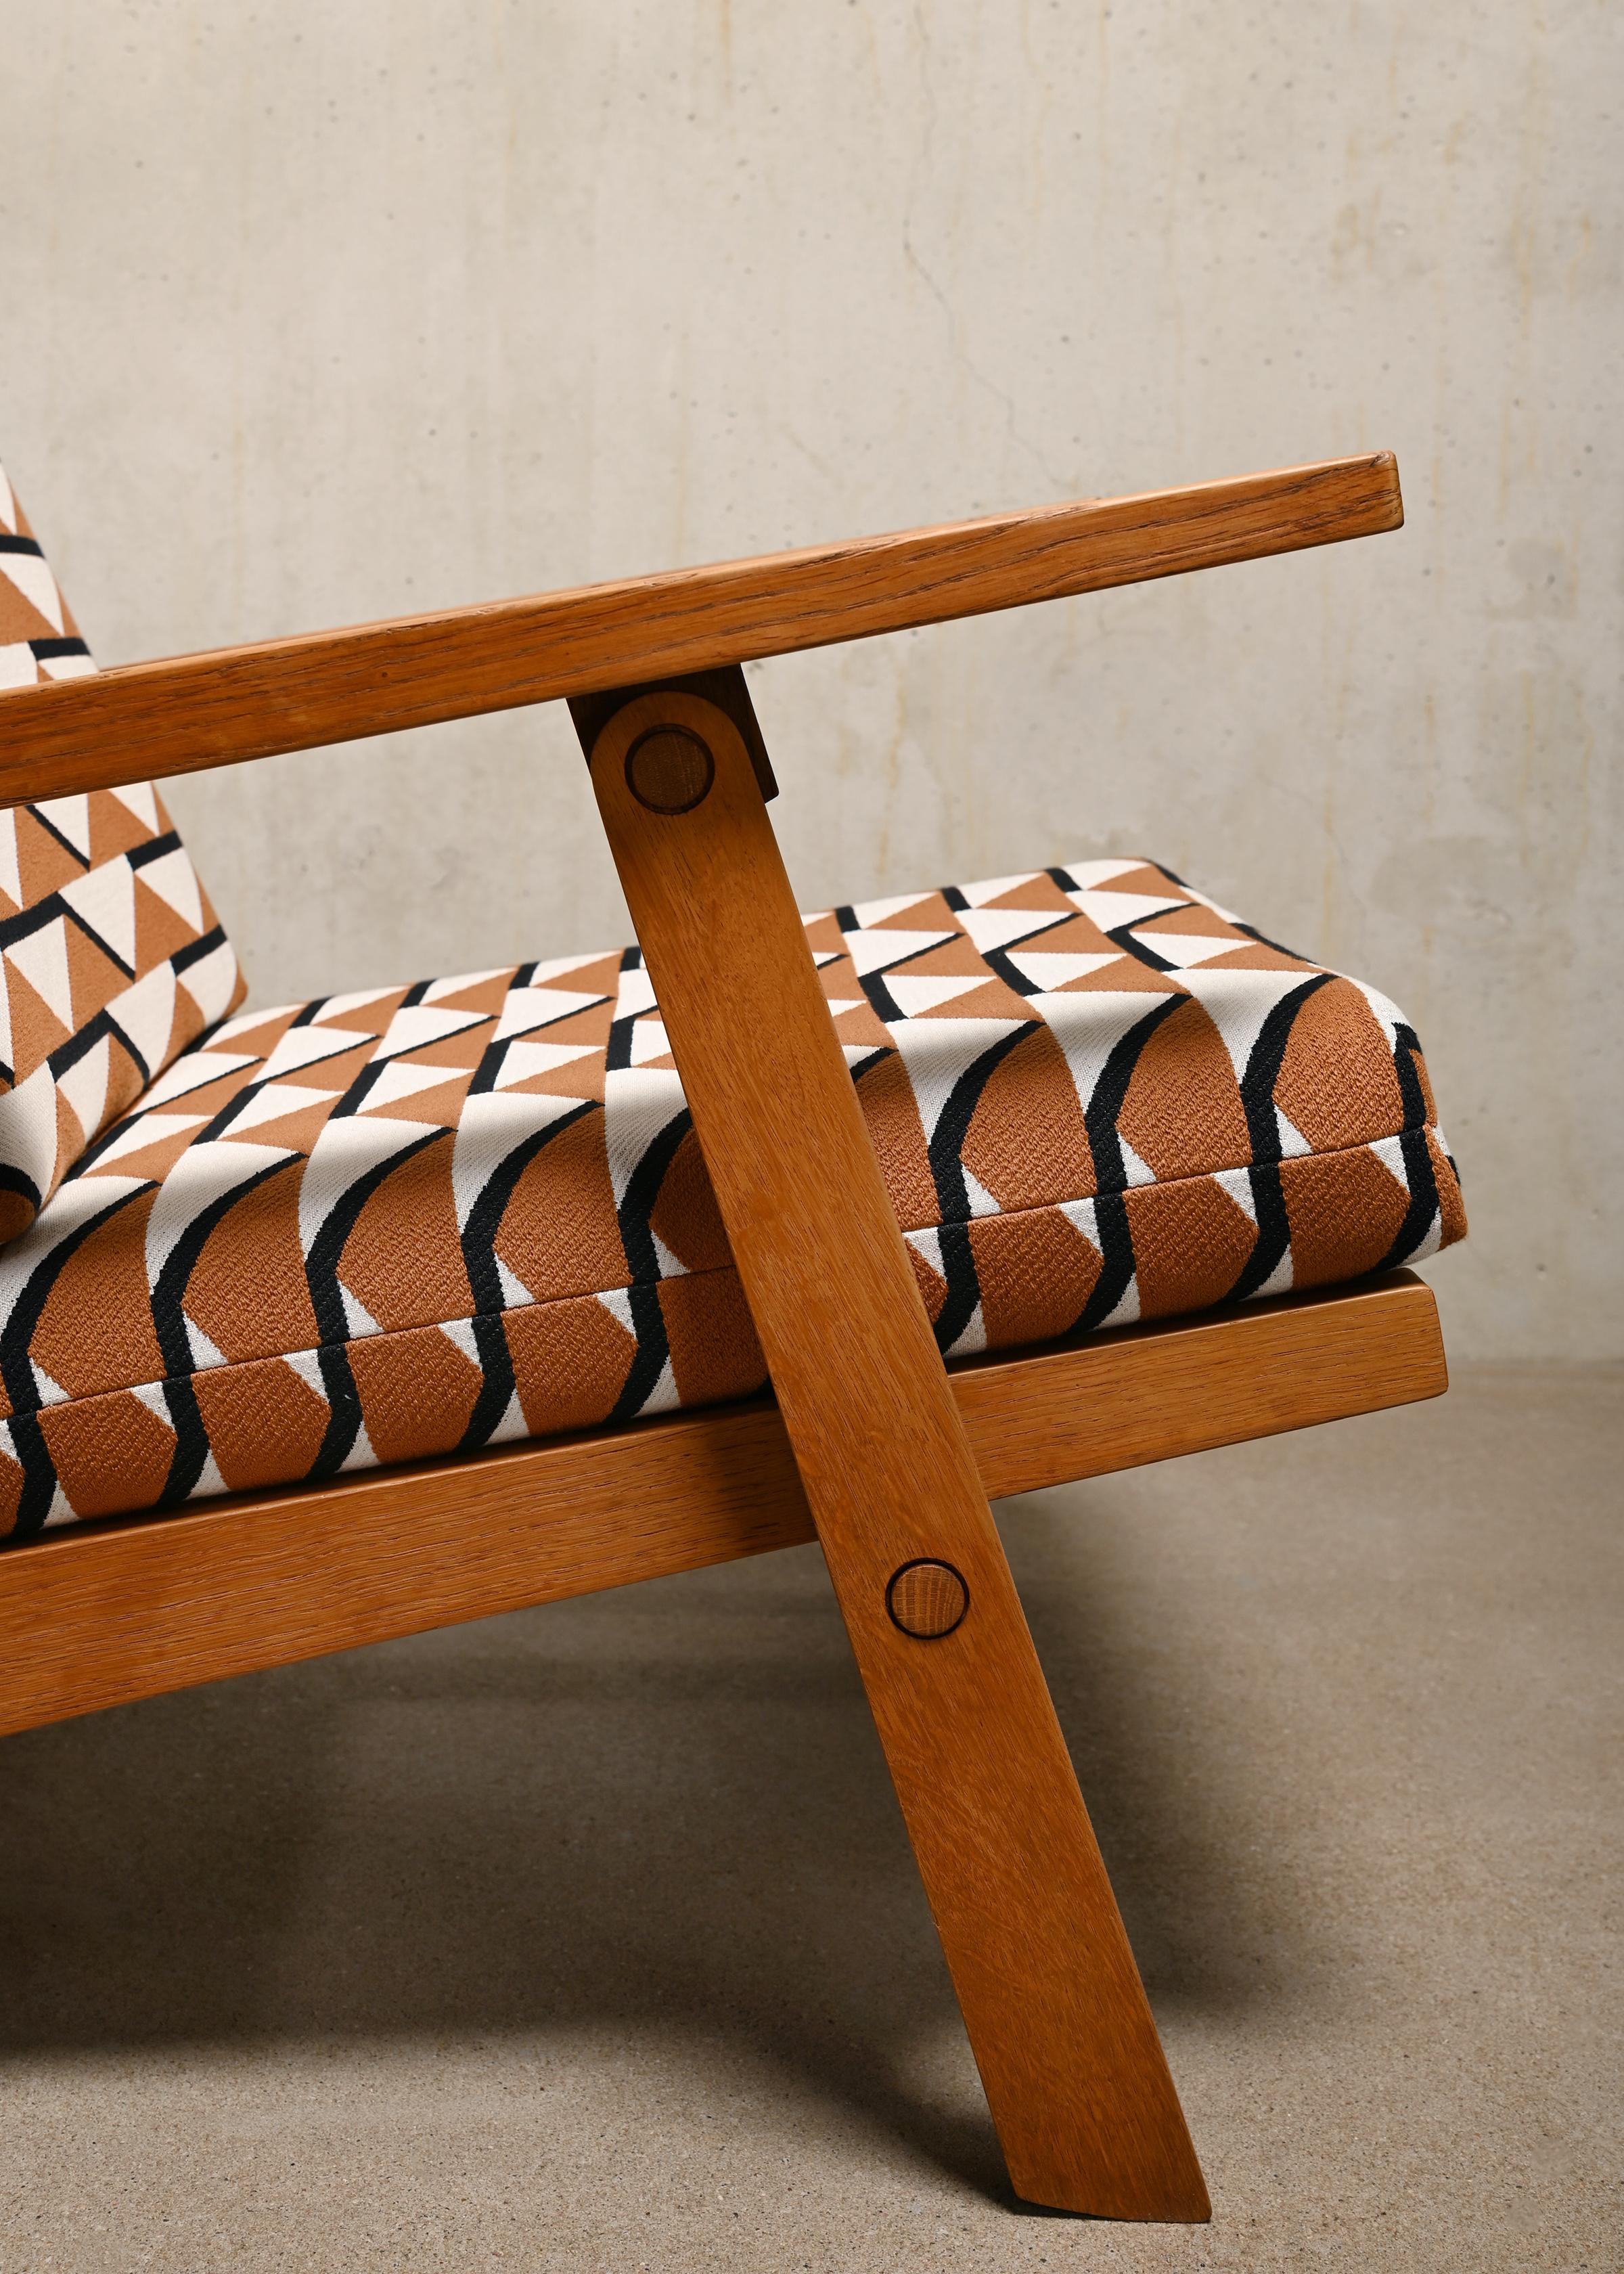 Hans J. Wegner Lounge Chair AP 72 in Oak and Pierre Frey fabric for AP Stolen 5